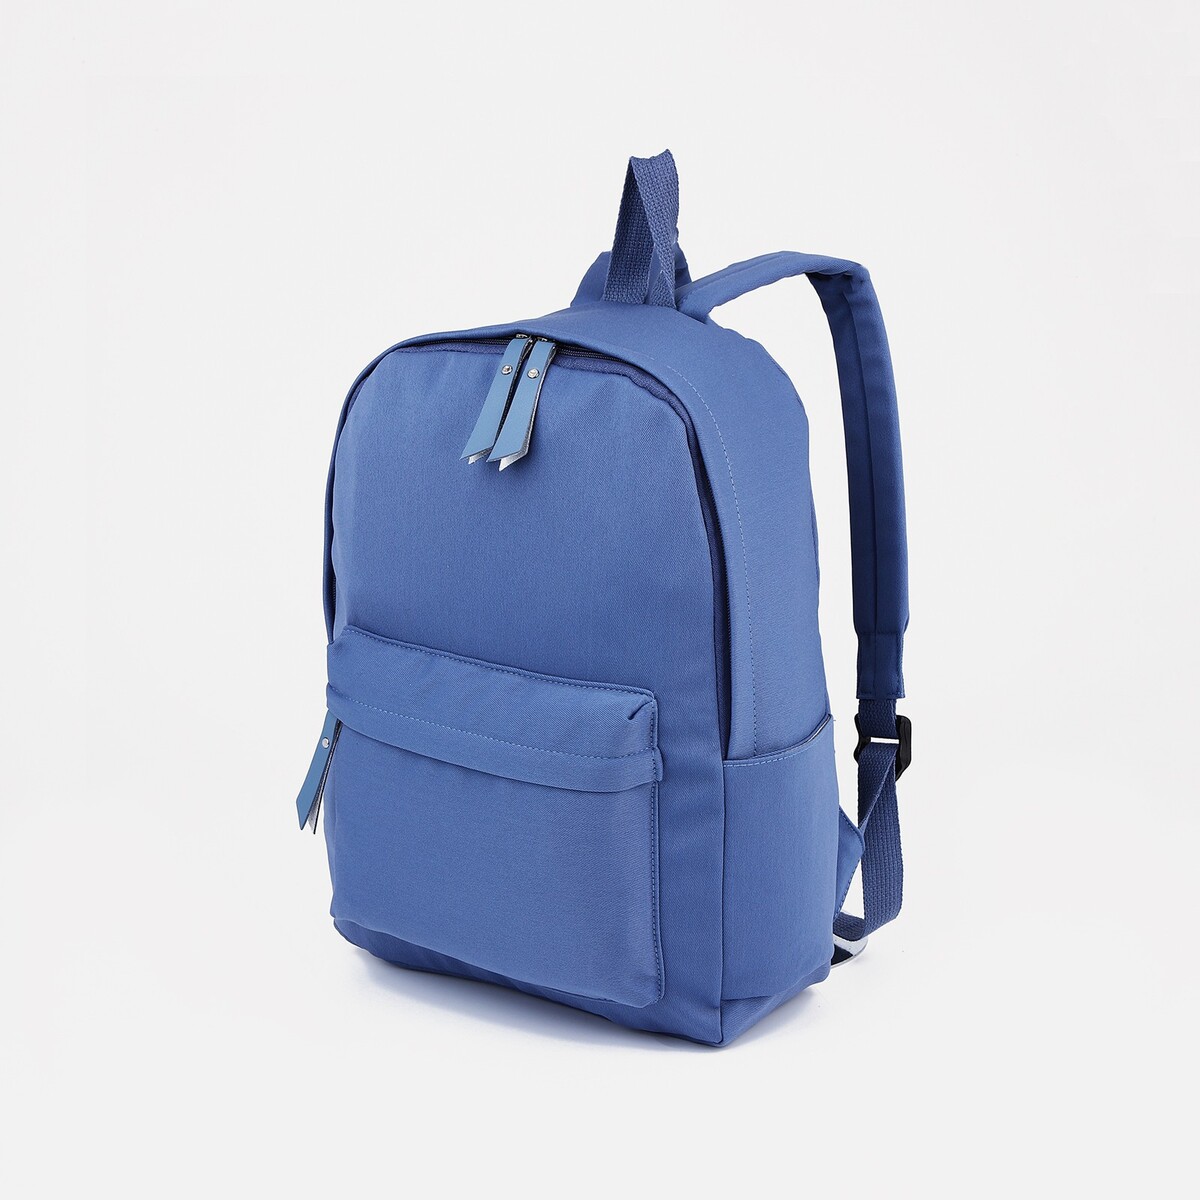 Рюкзак молодежный из текстиля, 4 кармана, цвет синий